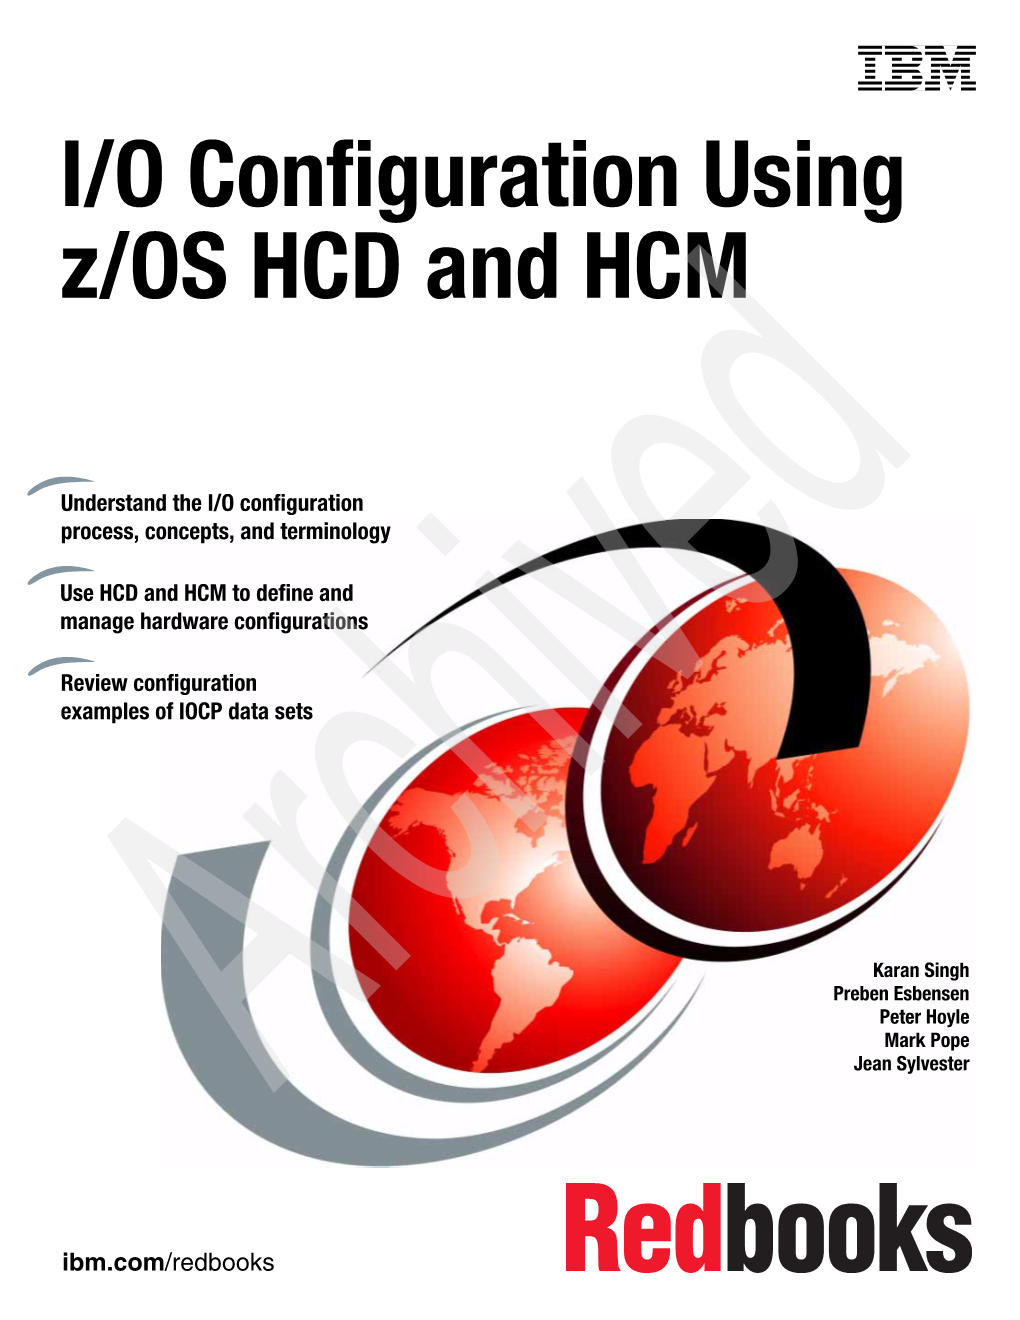 I/O Configuration Using Z/OS HCD and HCM